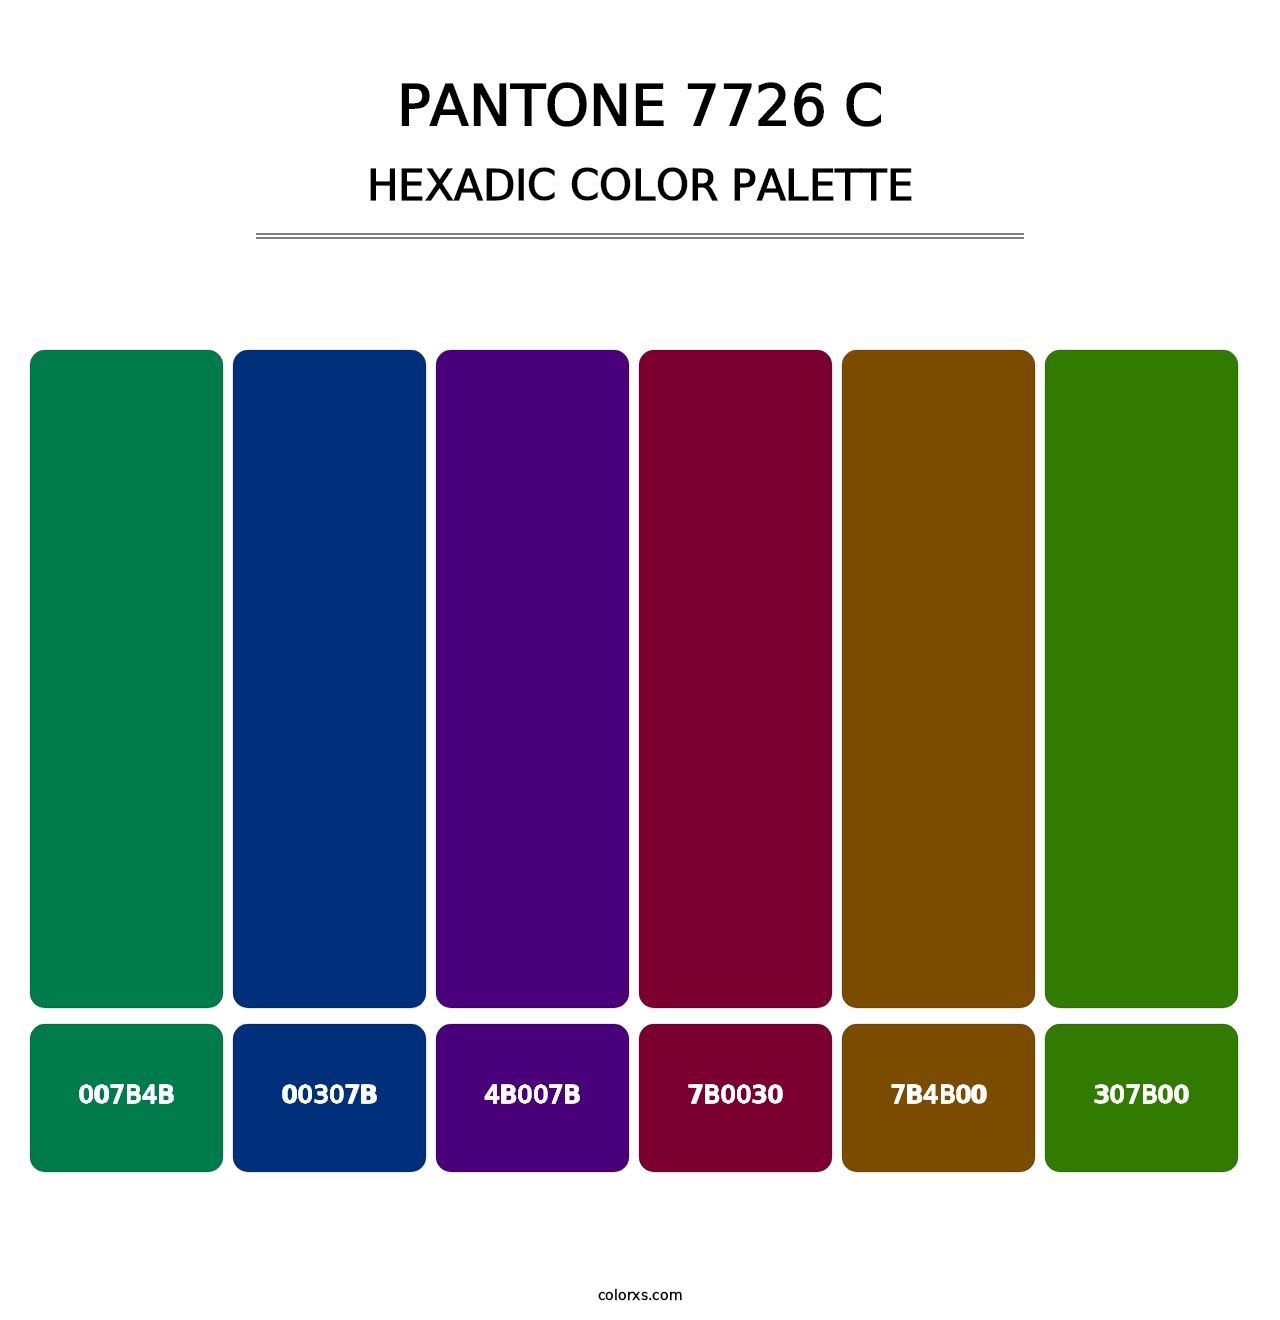 PANTONE 7726 C - Hexadic Color Palette